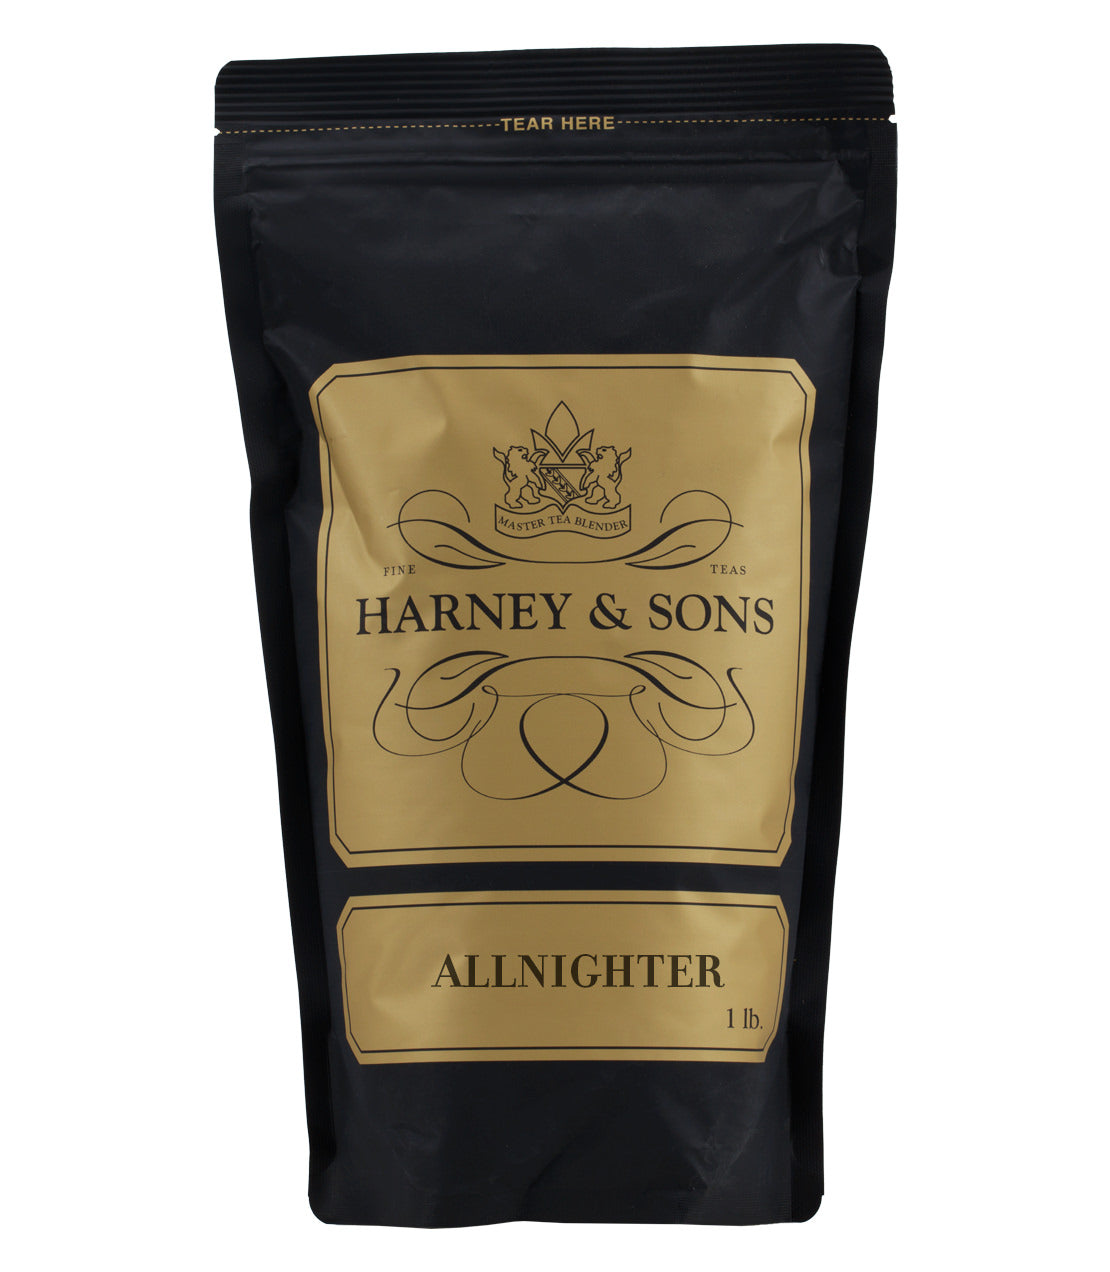 AllNighter - Loose 1 lb. Bag - Harney & Sons Fine Teas